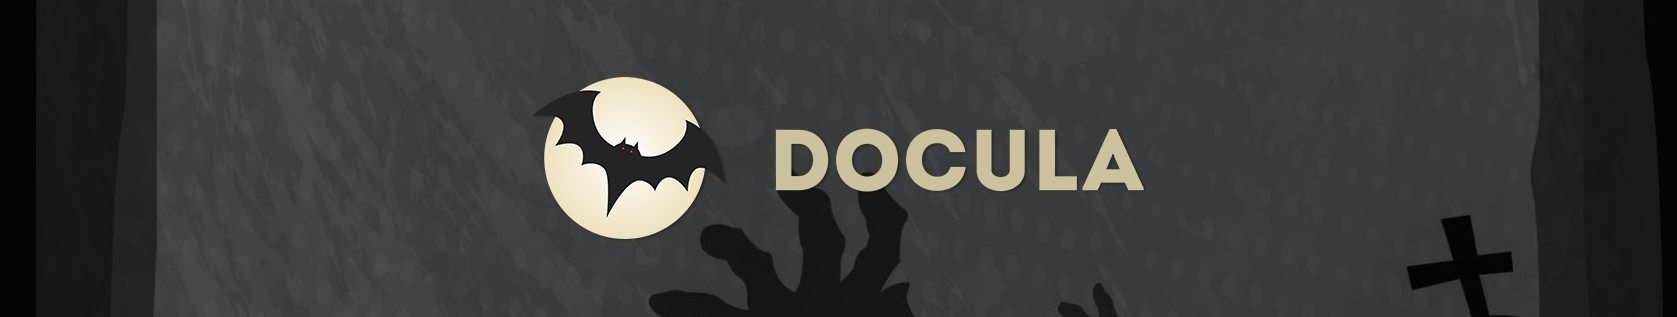 Introducing Docula!